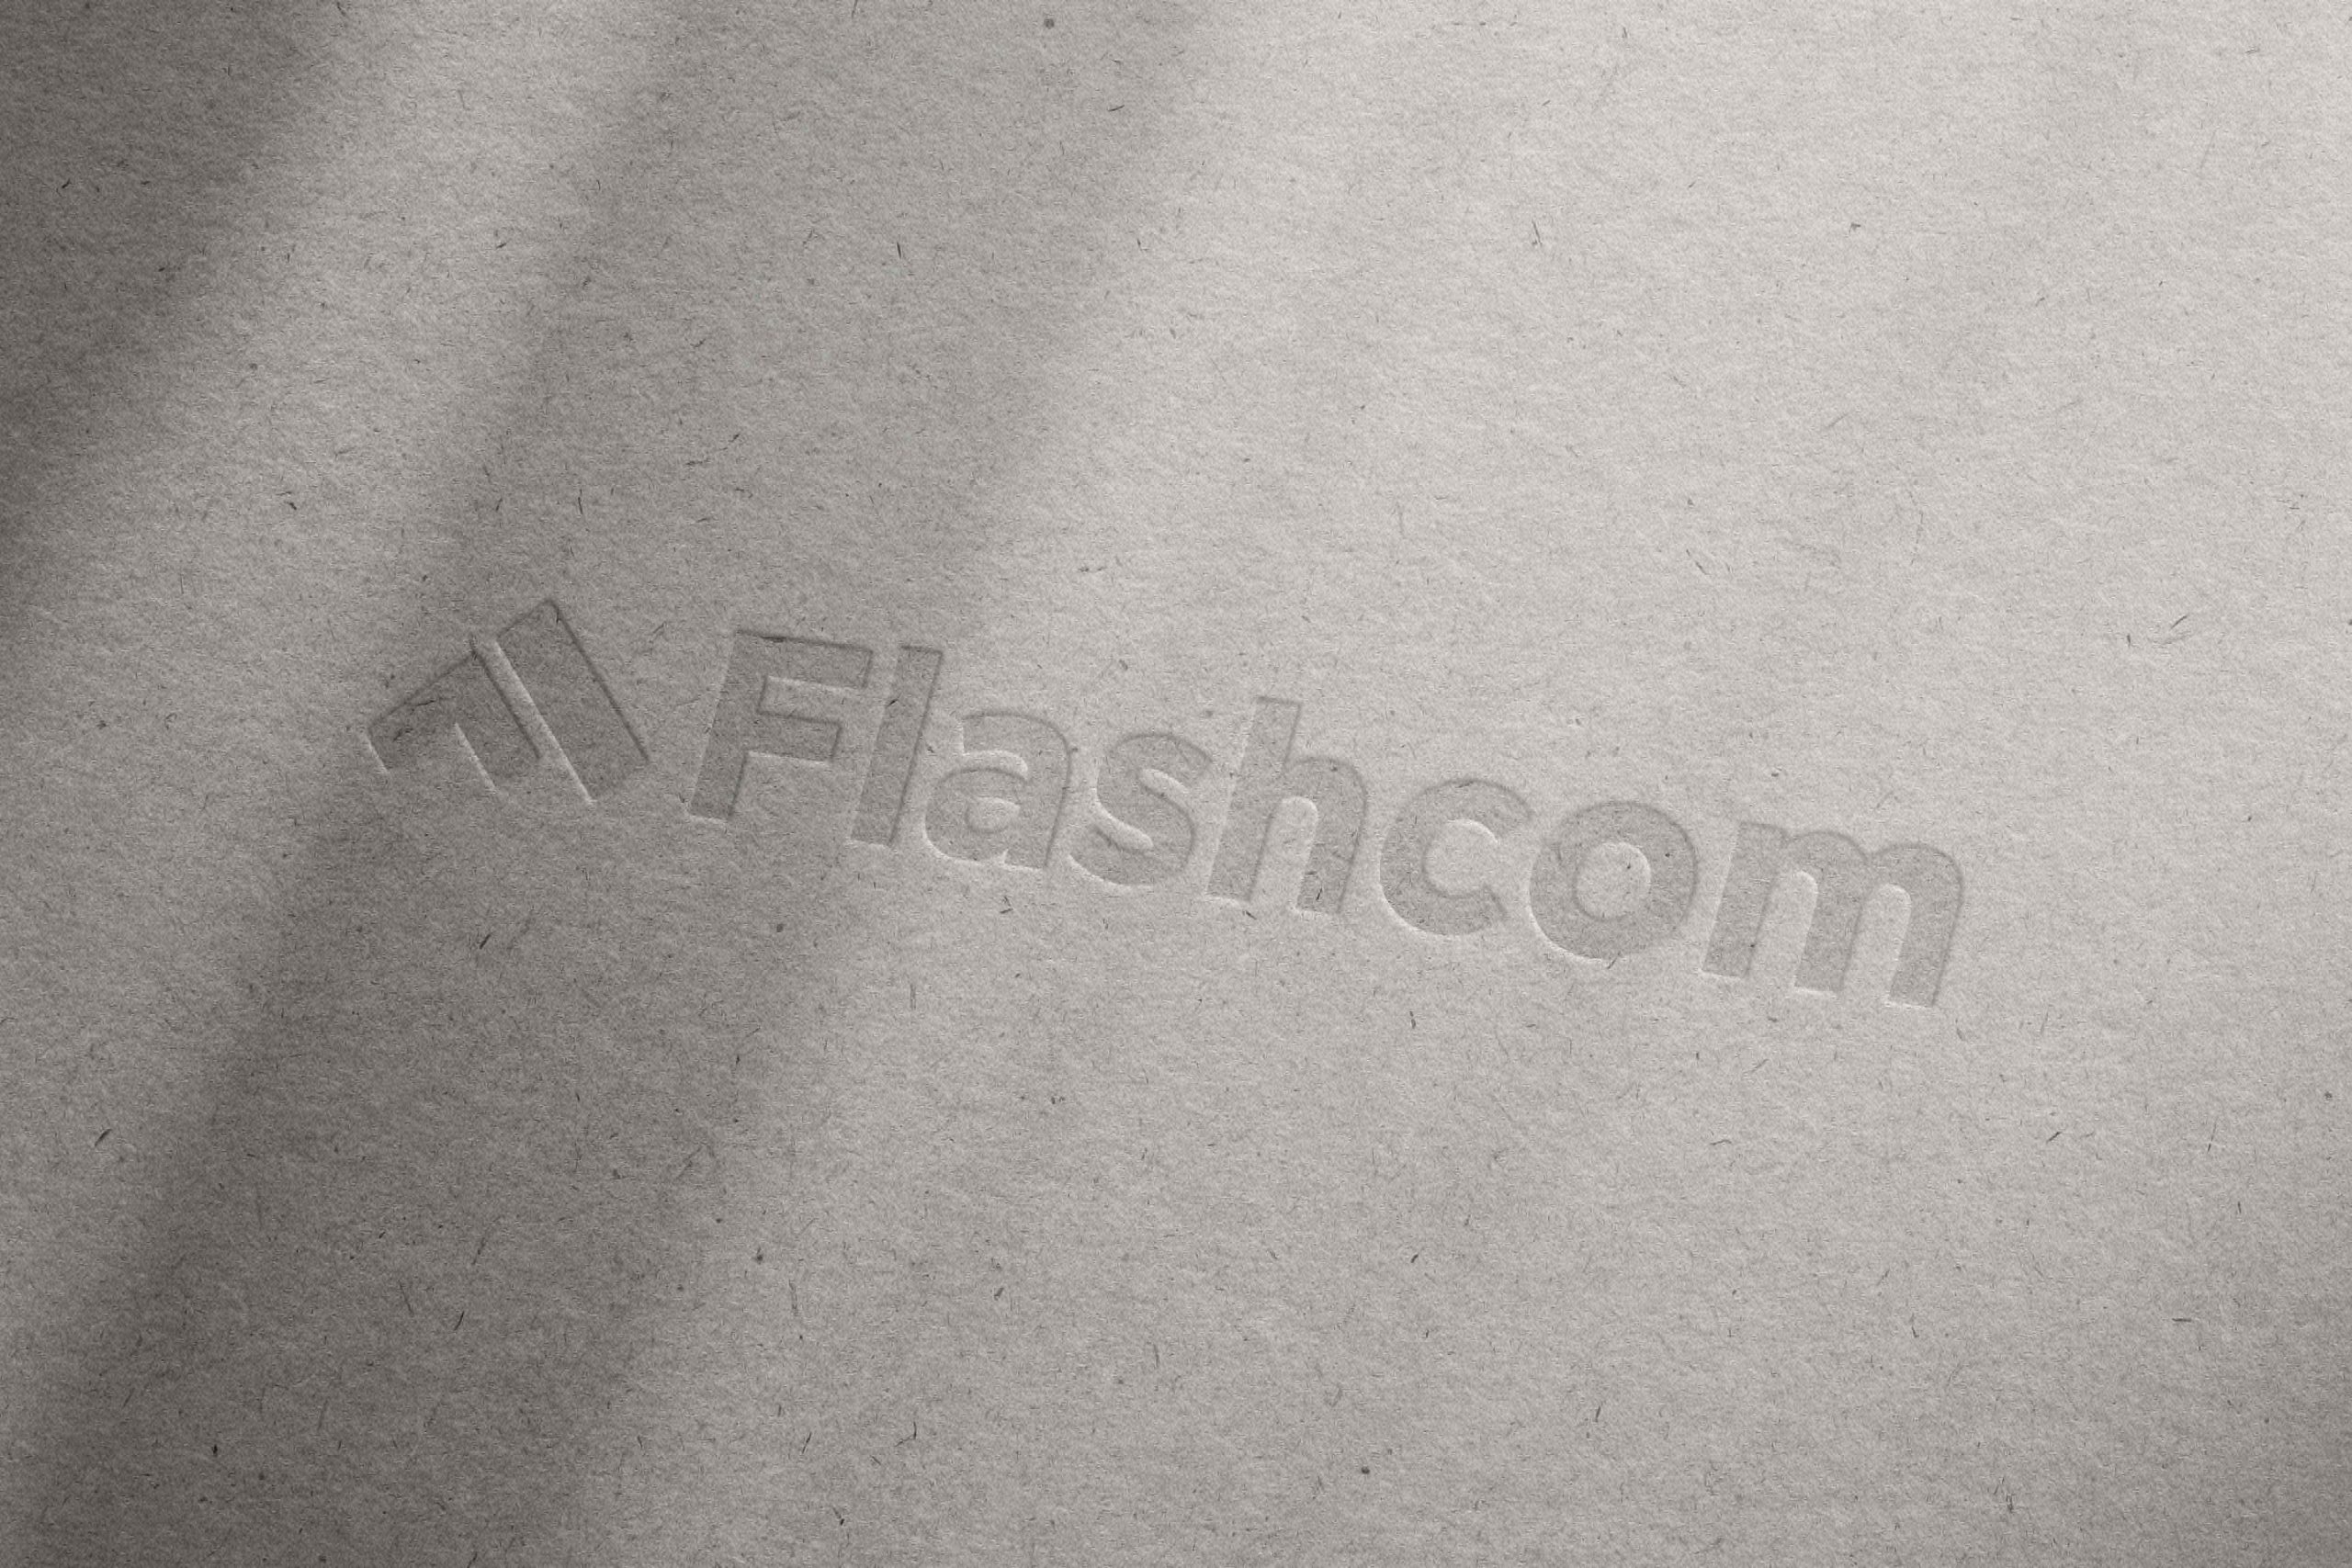 Flashcom Mockup New